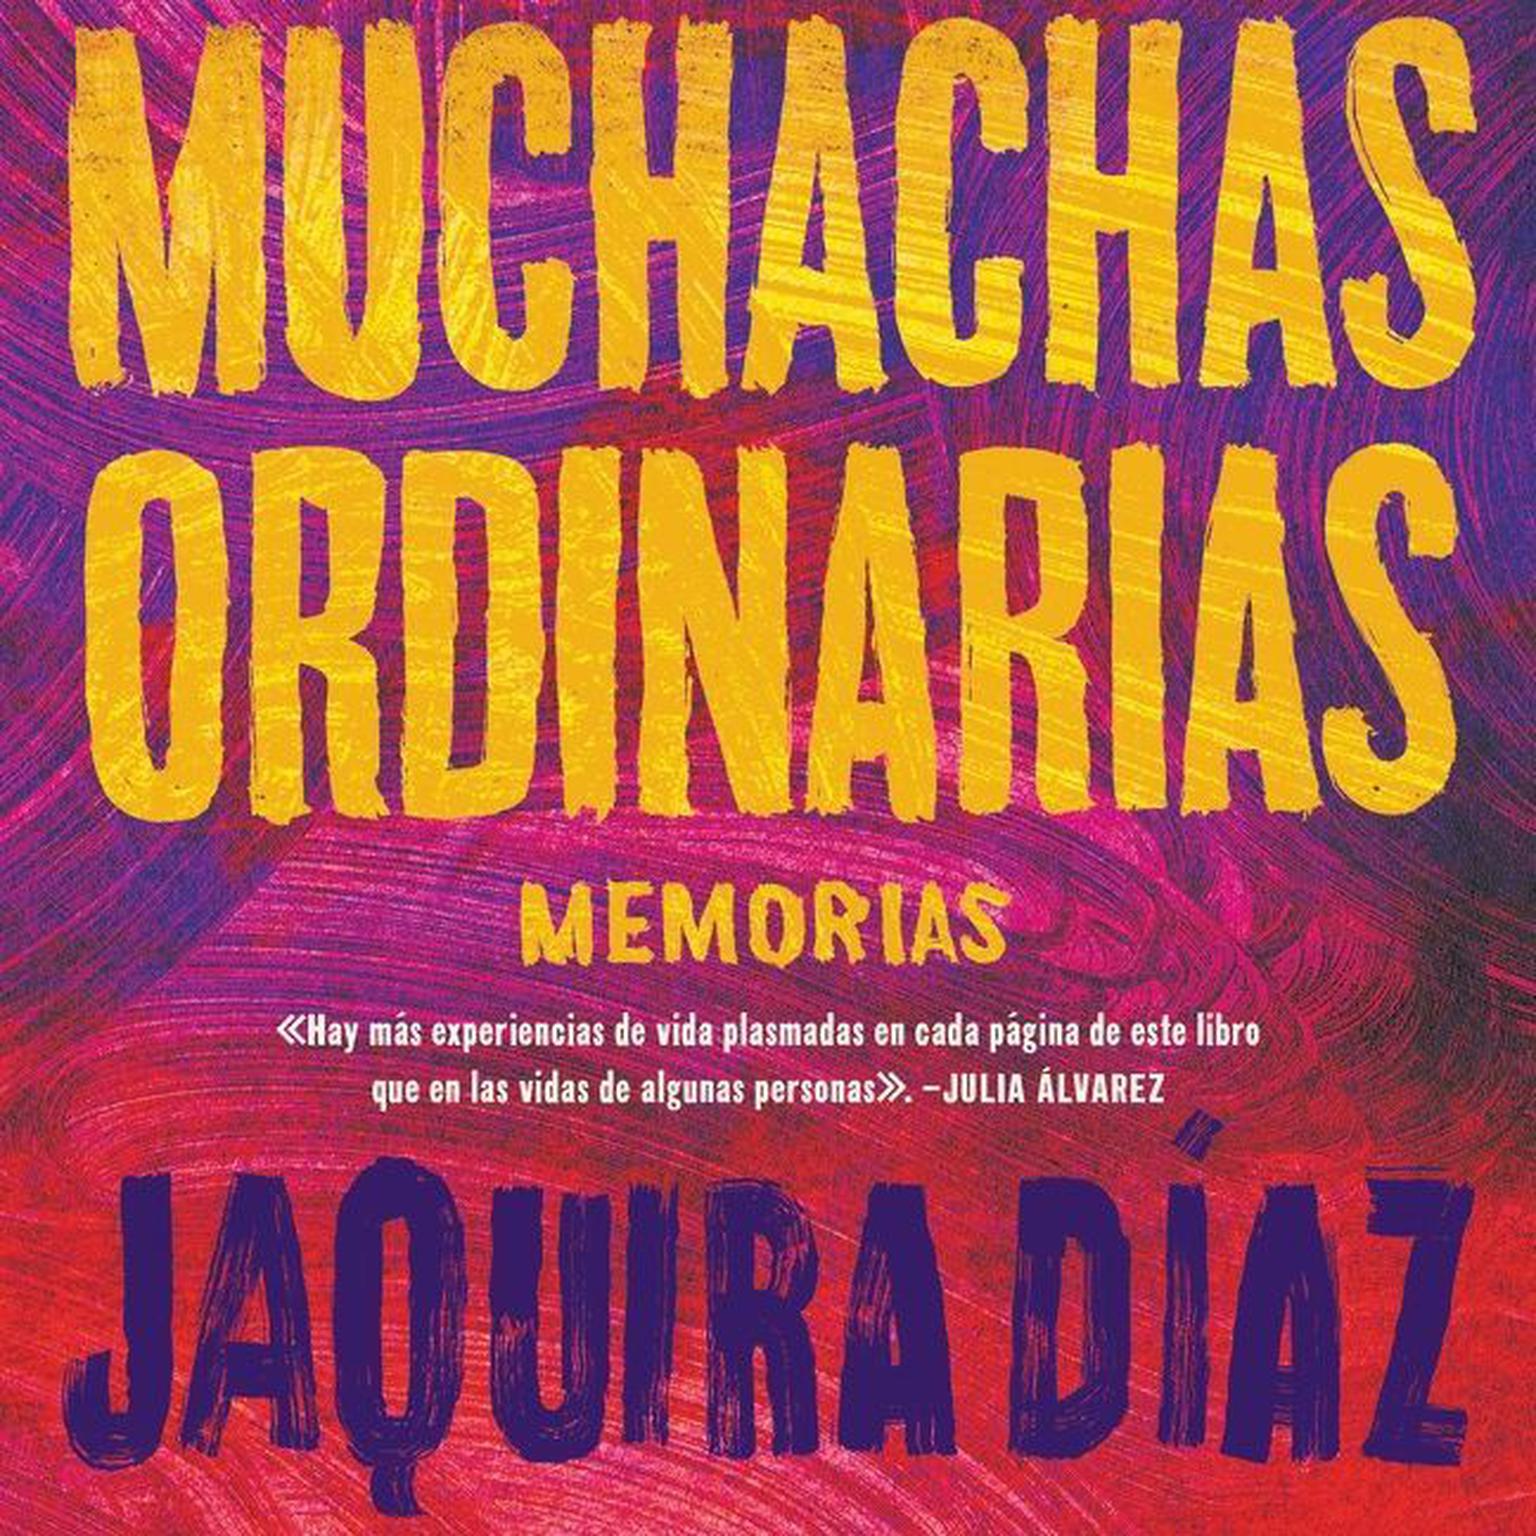 Ordinary Girls Muchachas ordinarias (Spanish edition): Memorias Audiobook, by Jaquira Diaz